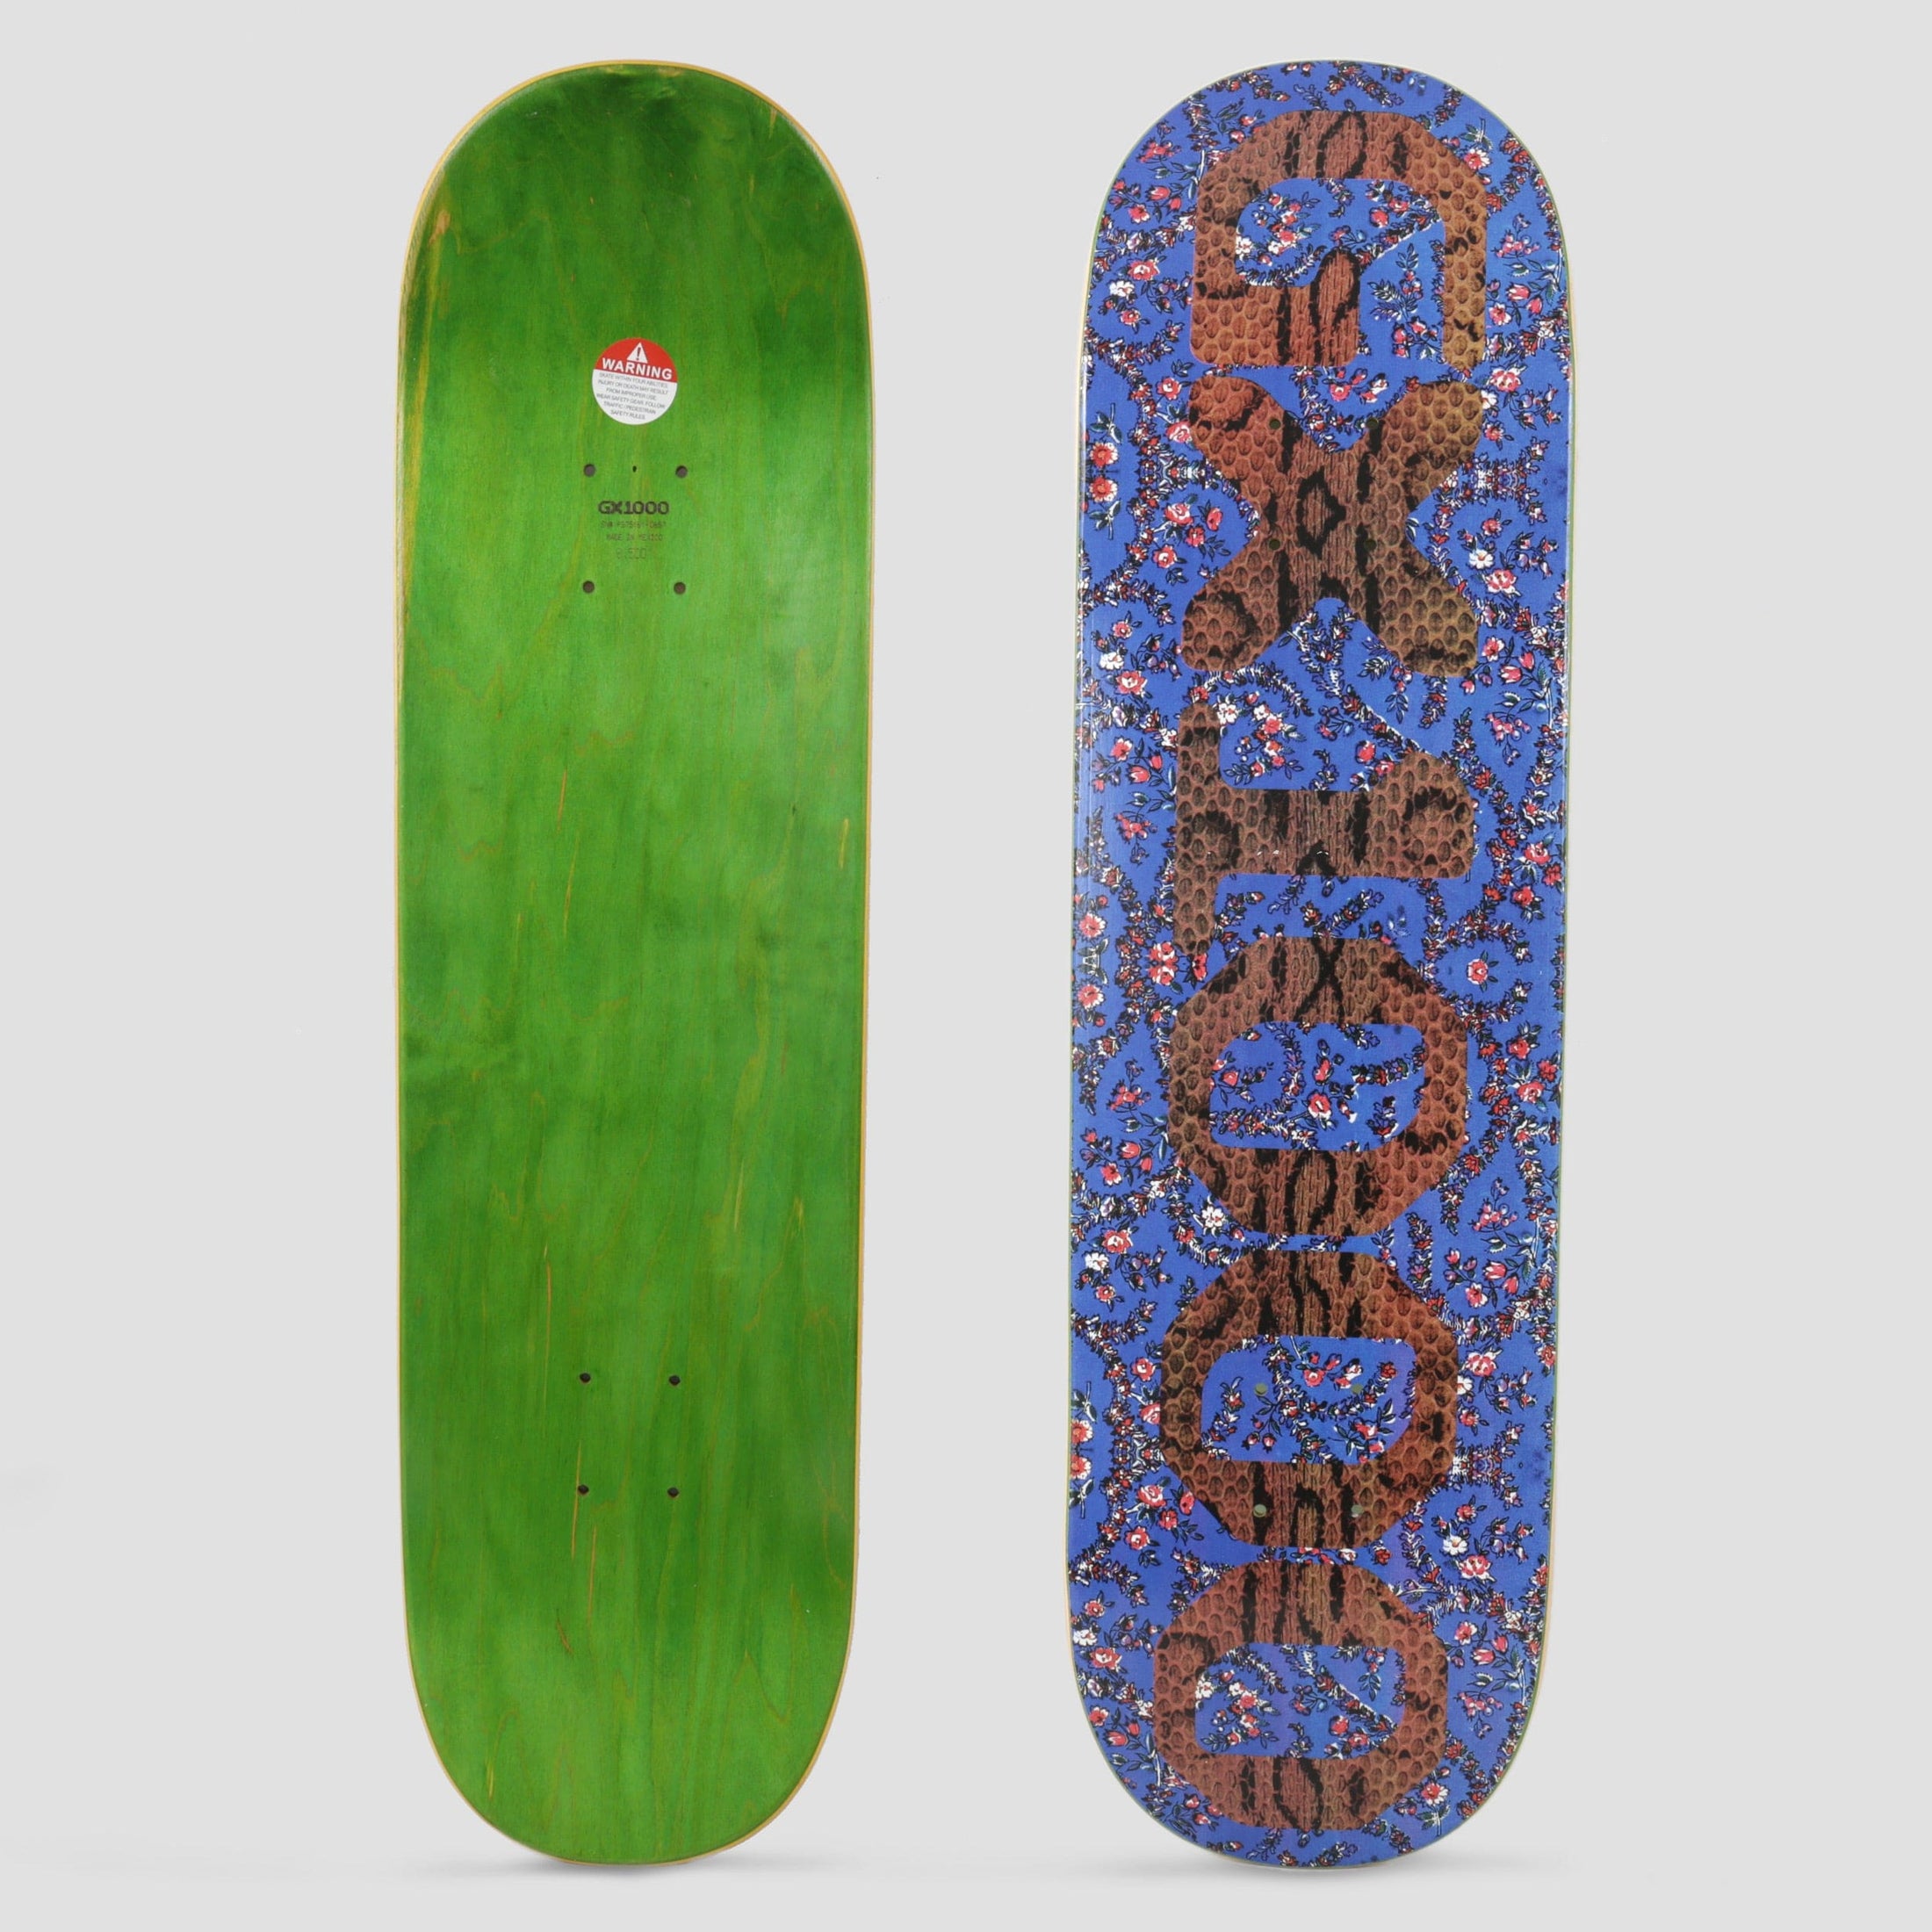 GX1000 8.5 Green Scales 2 Skateboard Deck Blue